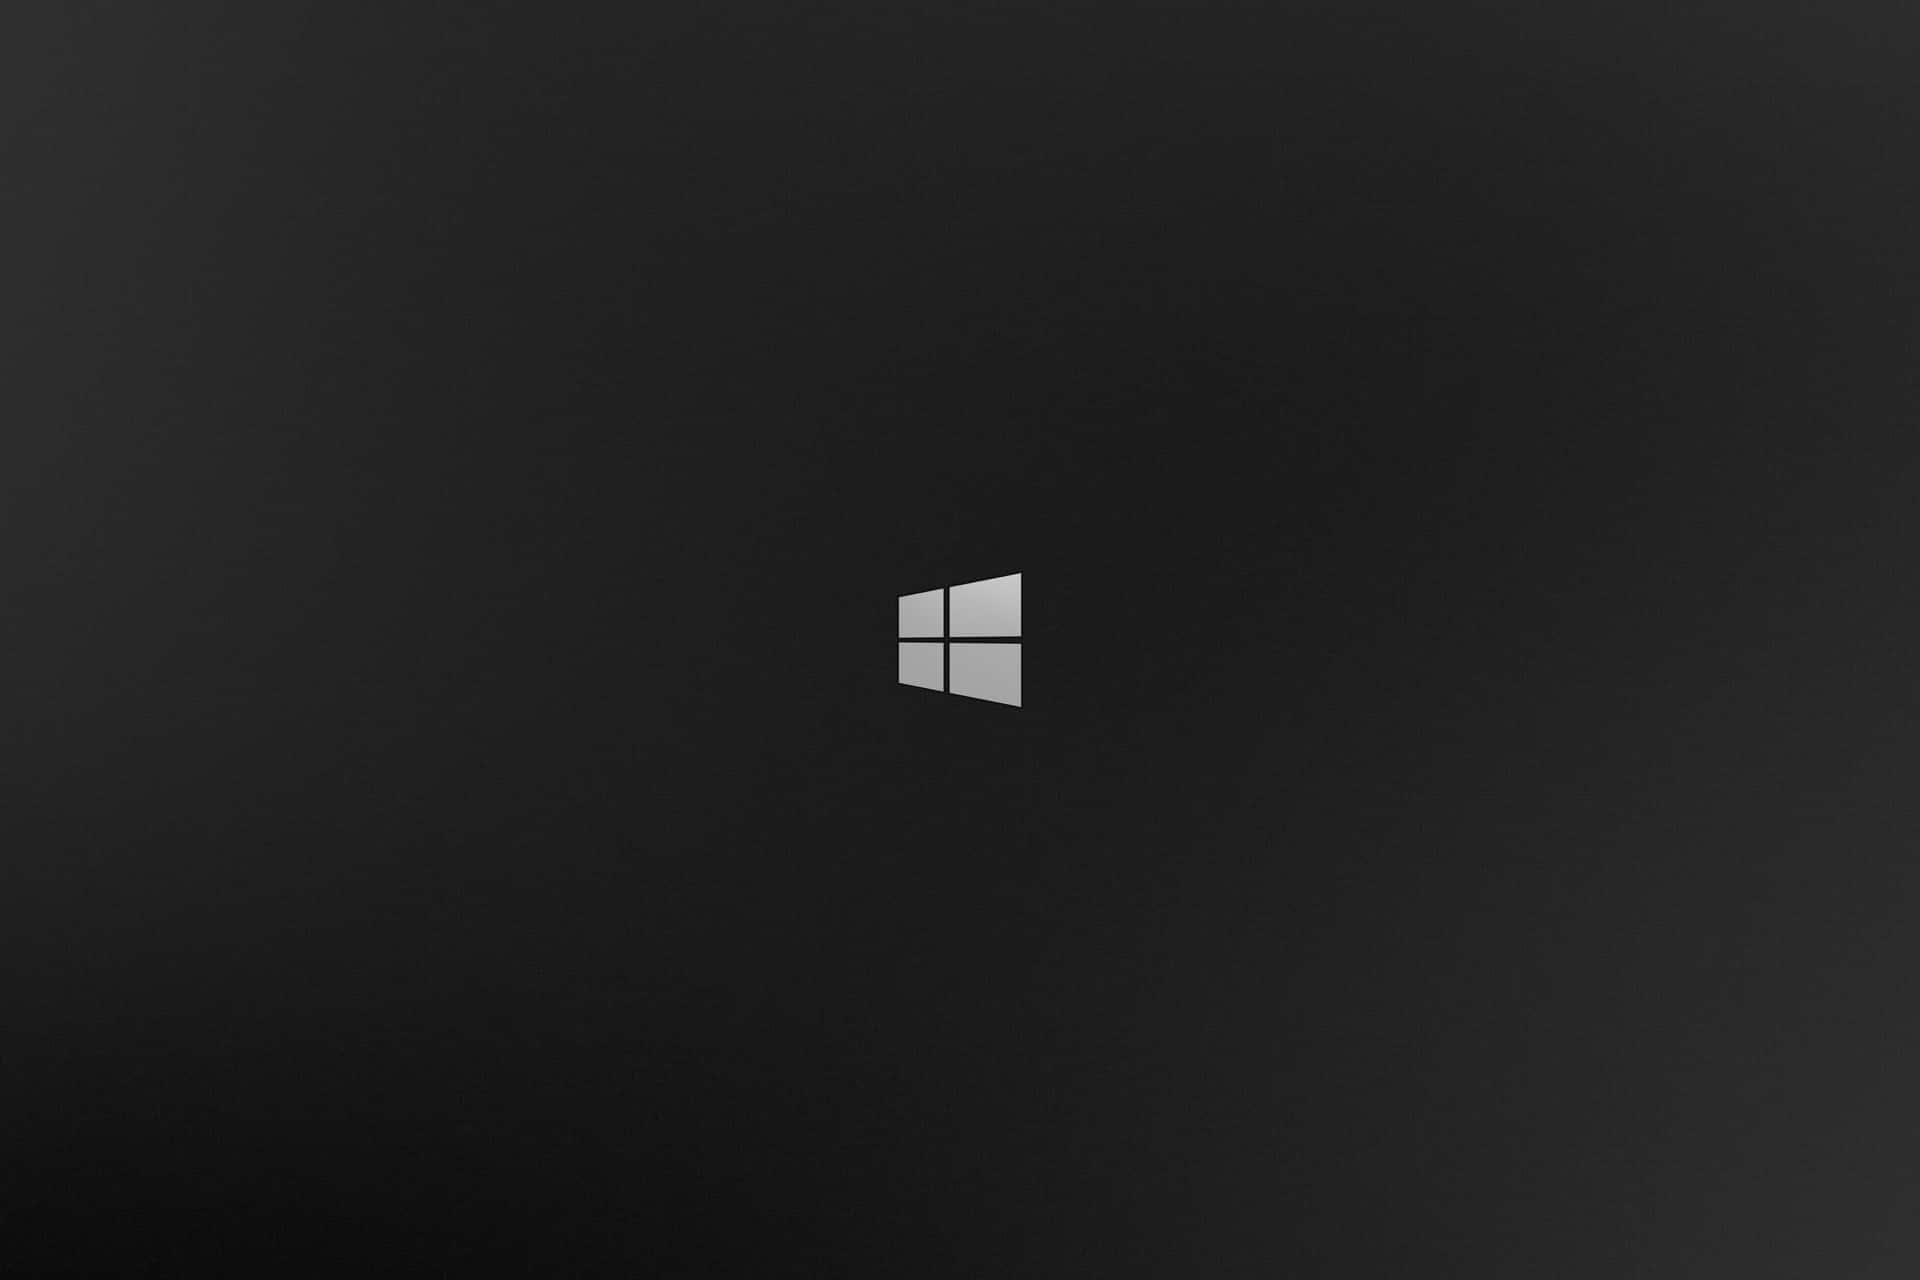 Estaes La Interfaz De Usuario De Windows 1. Fondo de pantalla